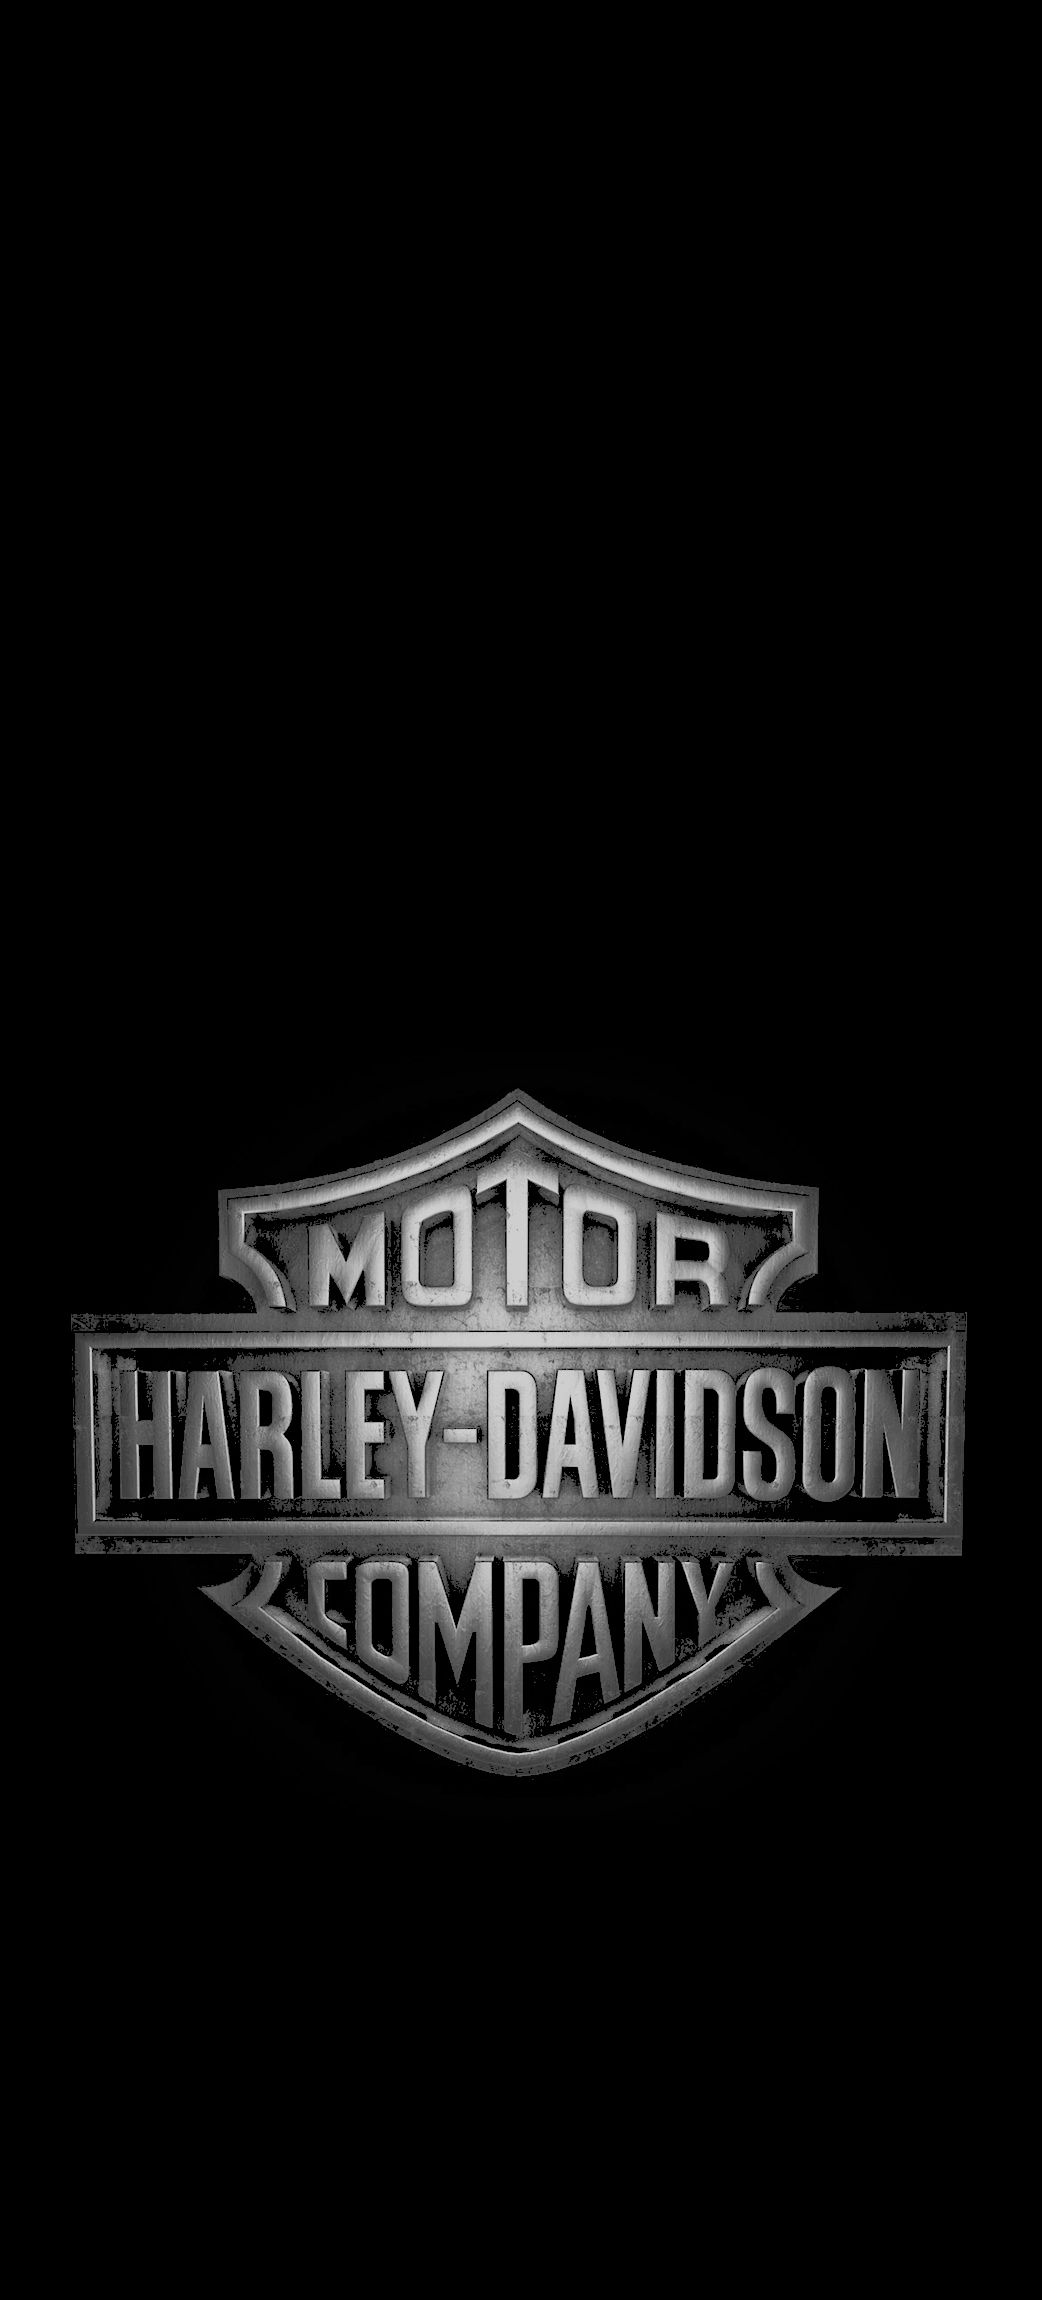 Harley Phone Wallpaper. Harley davidson image, Harley davidson wallpaper, Harley davidson art